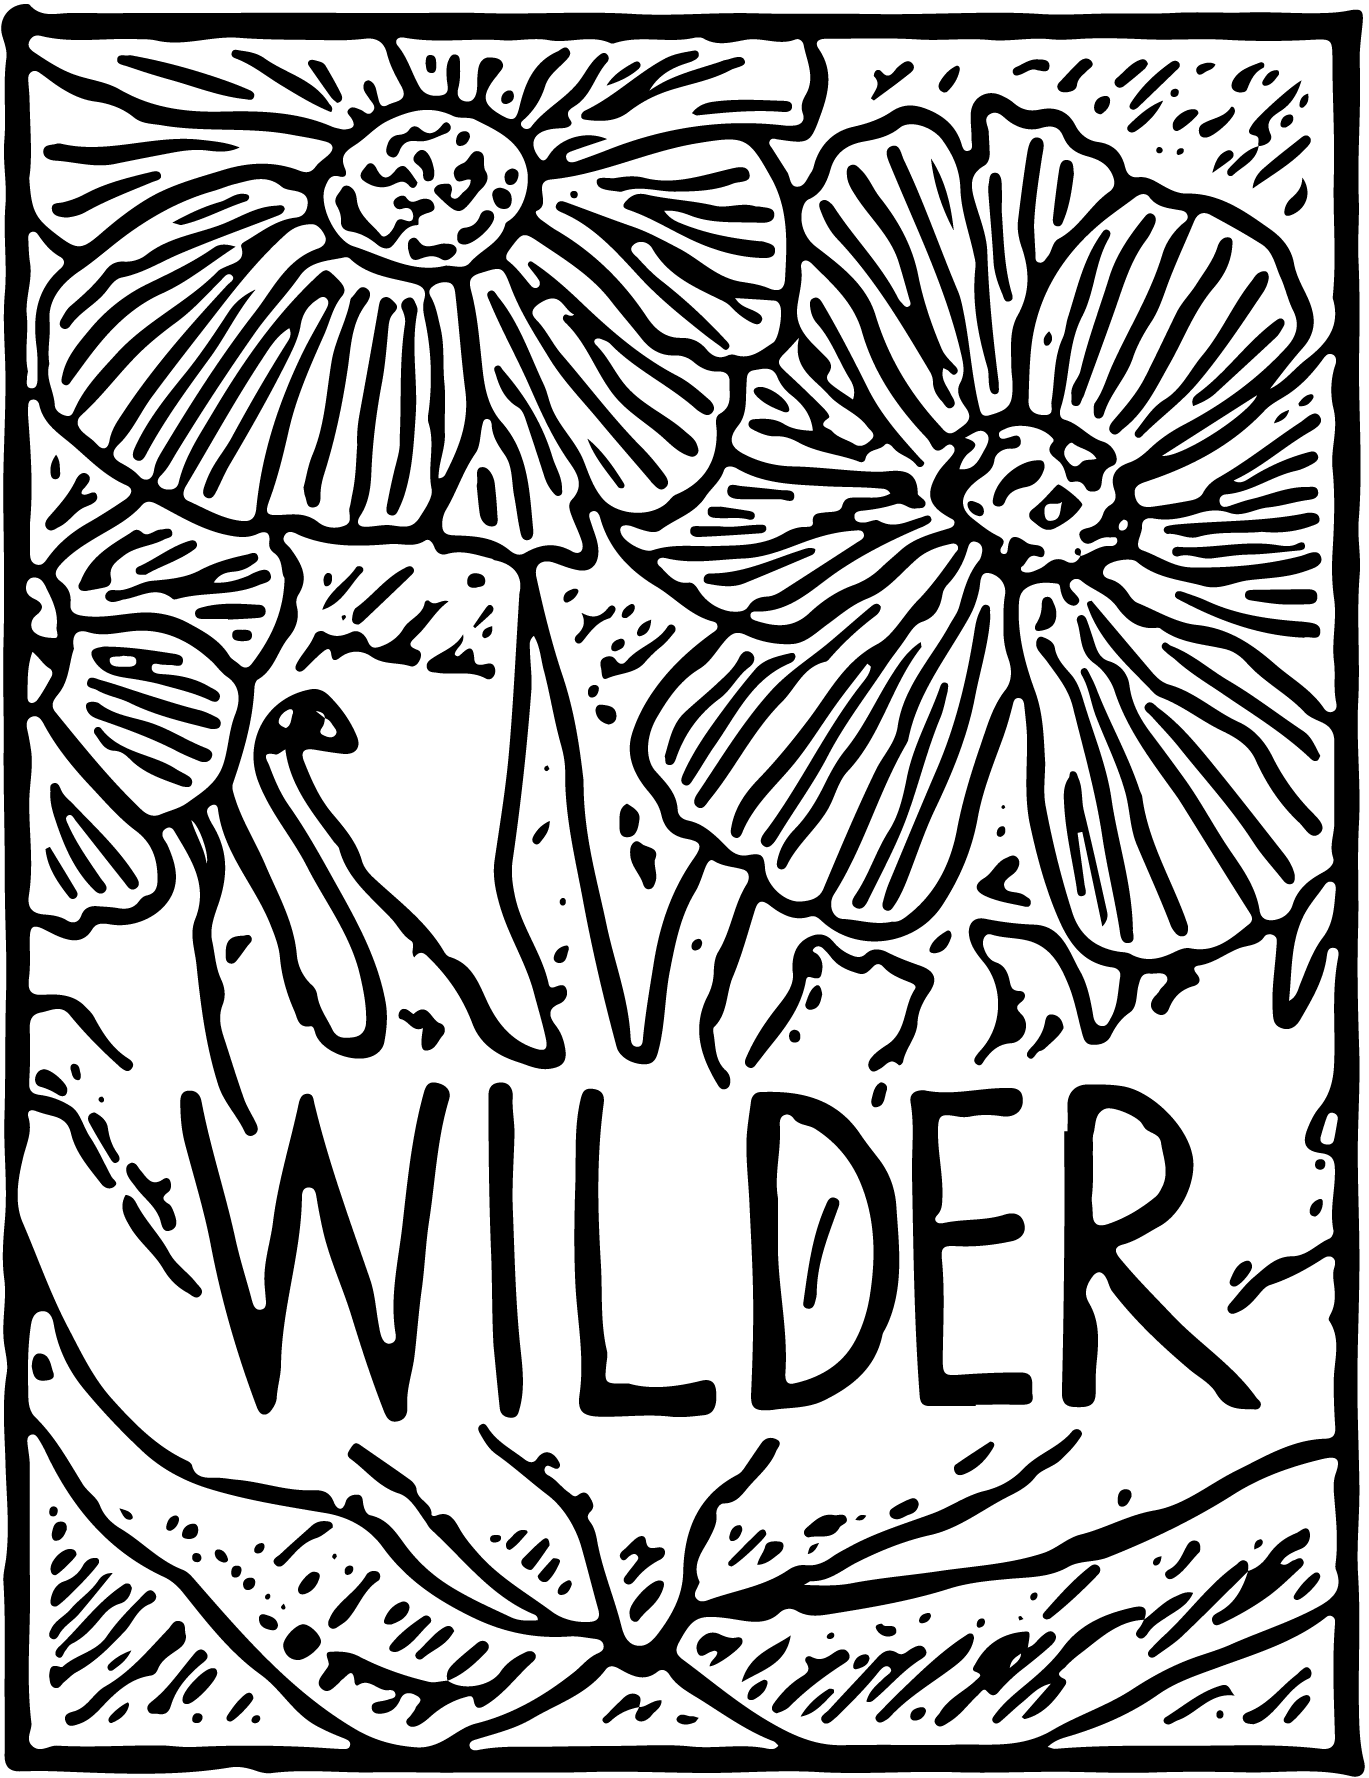 Wilder Shop LA